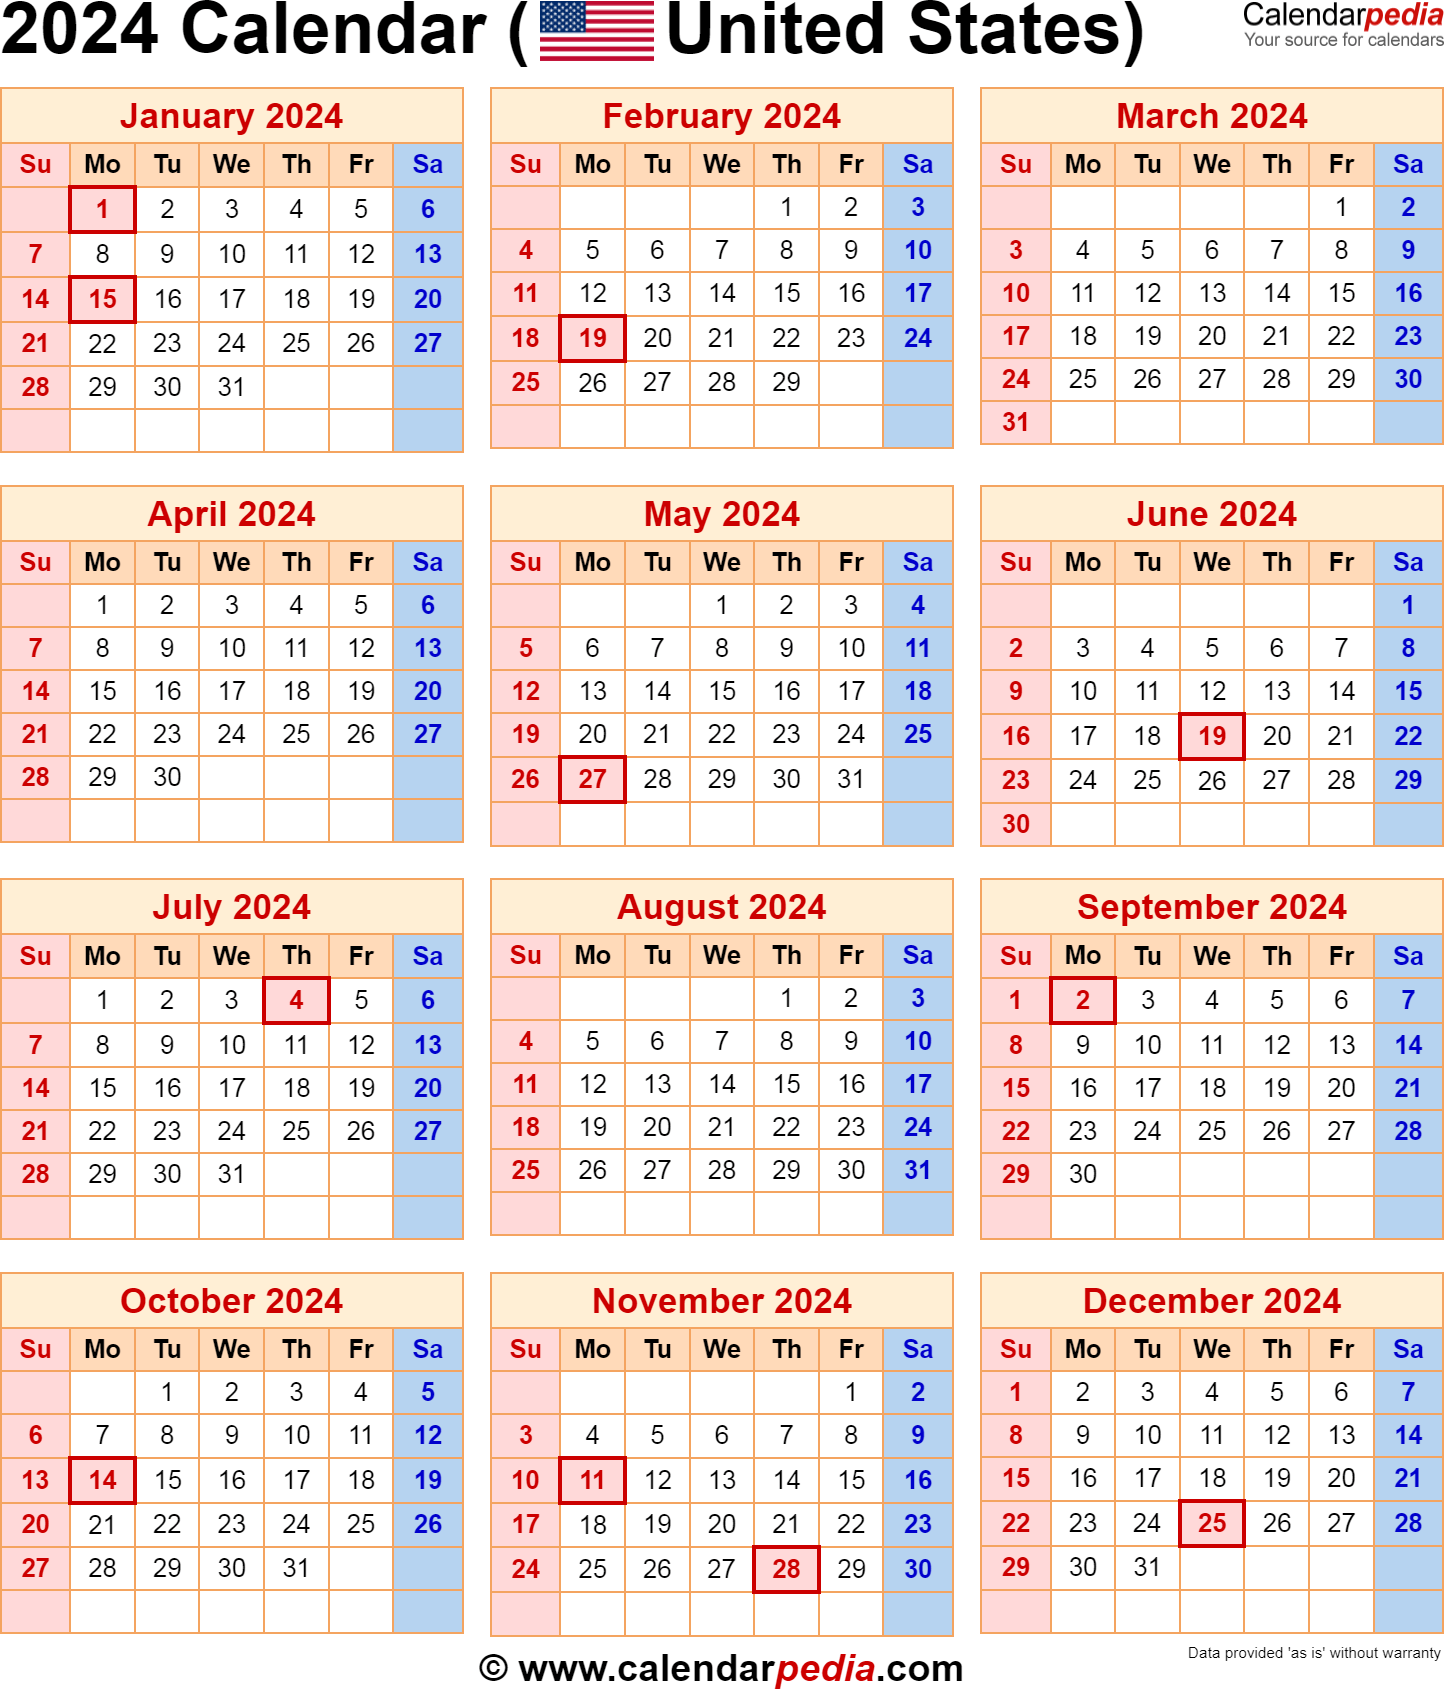 2024 Calendar Printable Free - Free Printable 2024 Calendar With Us Holidays For Crafts